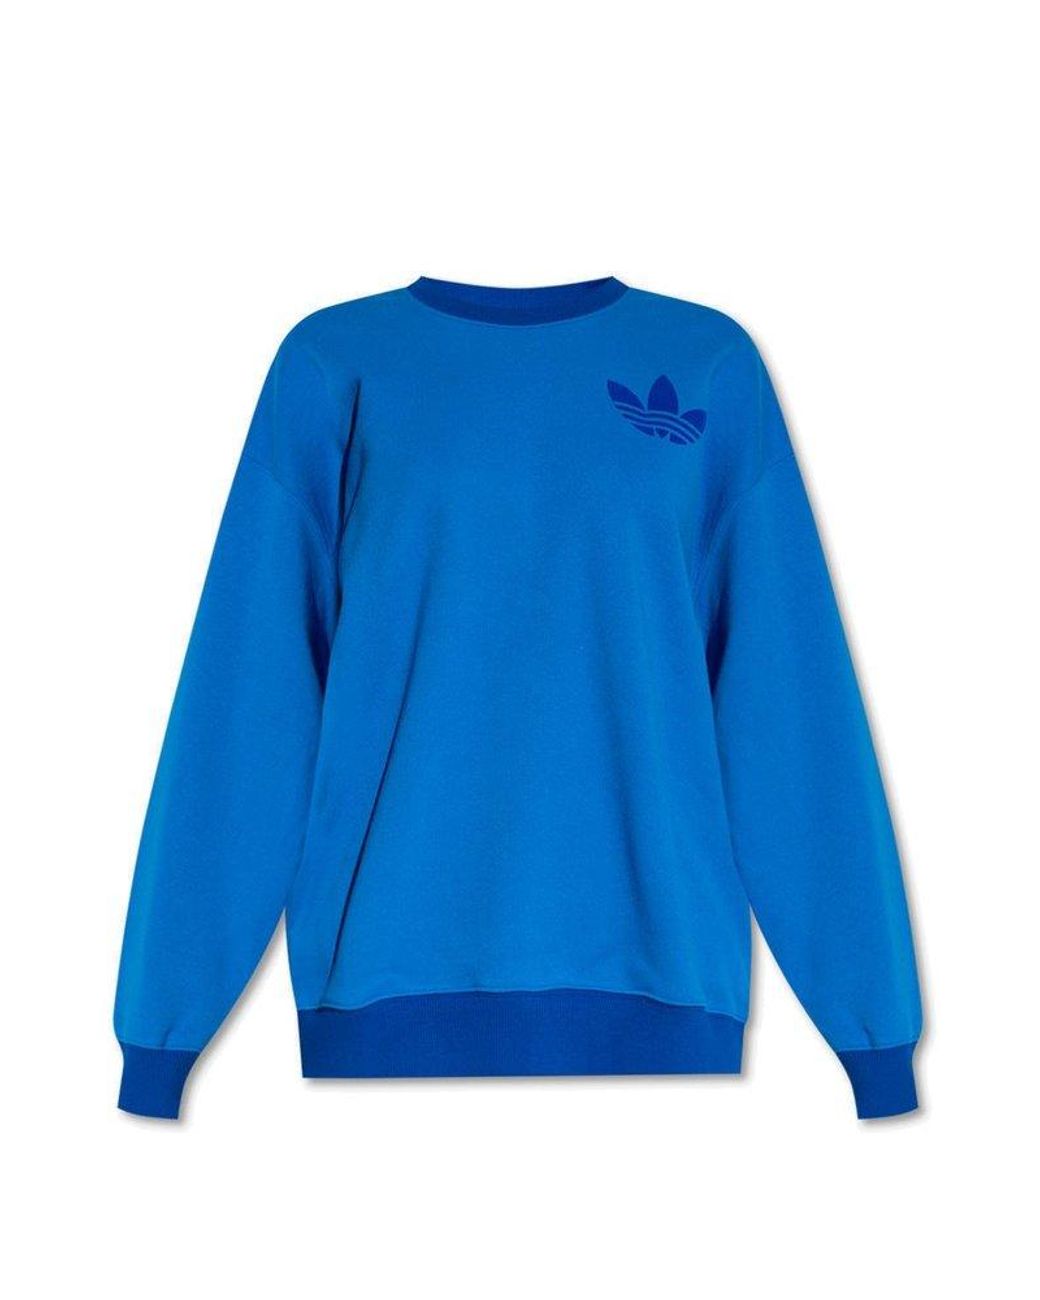 adidas Originals Oversize Sweatshirt in Blue | Lyst